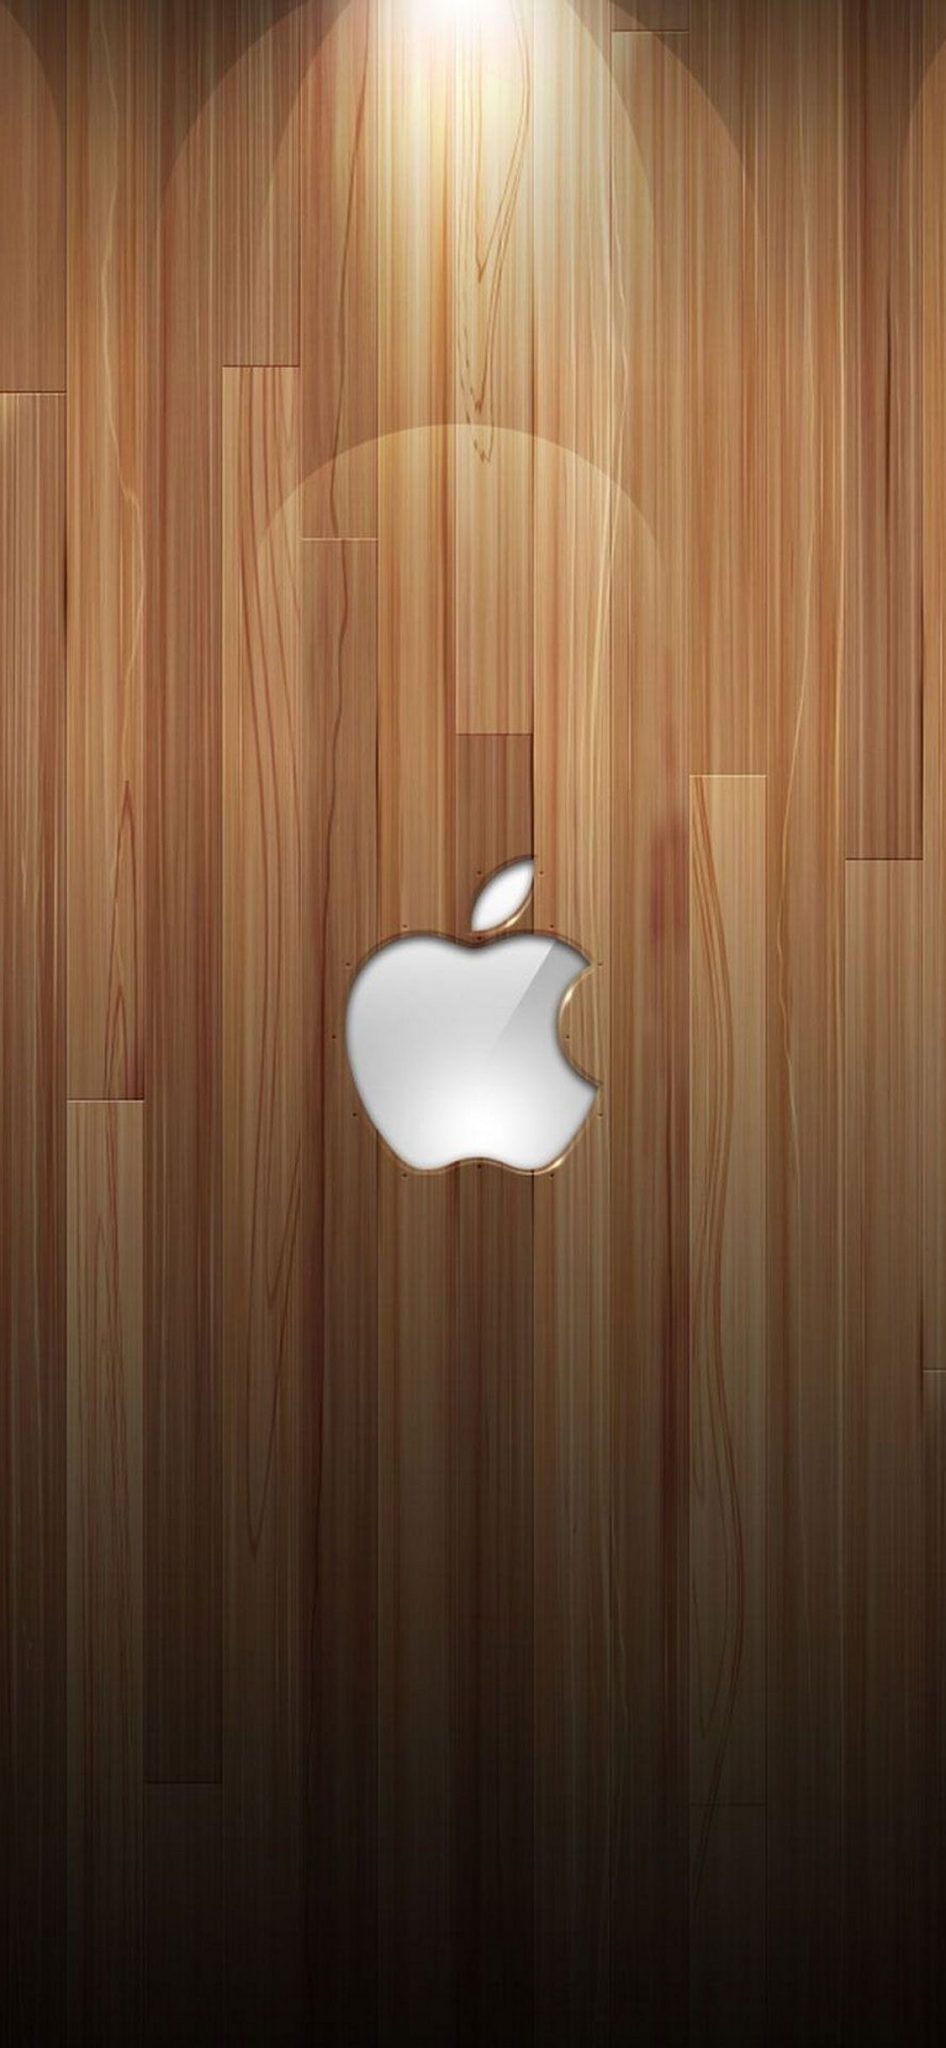 Apple Logo iPhone Wallpaper - 08